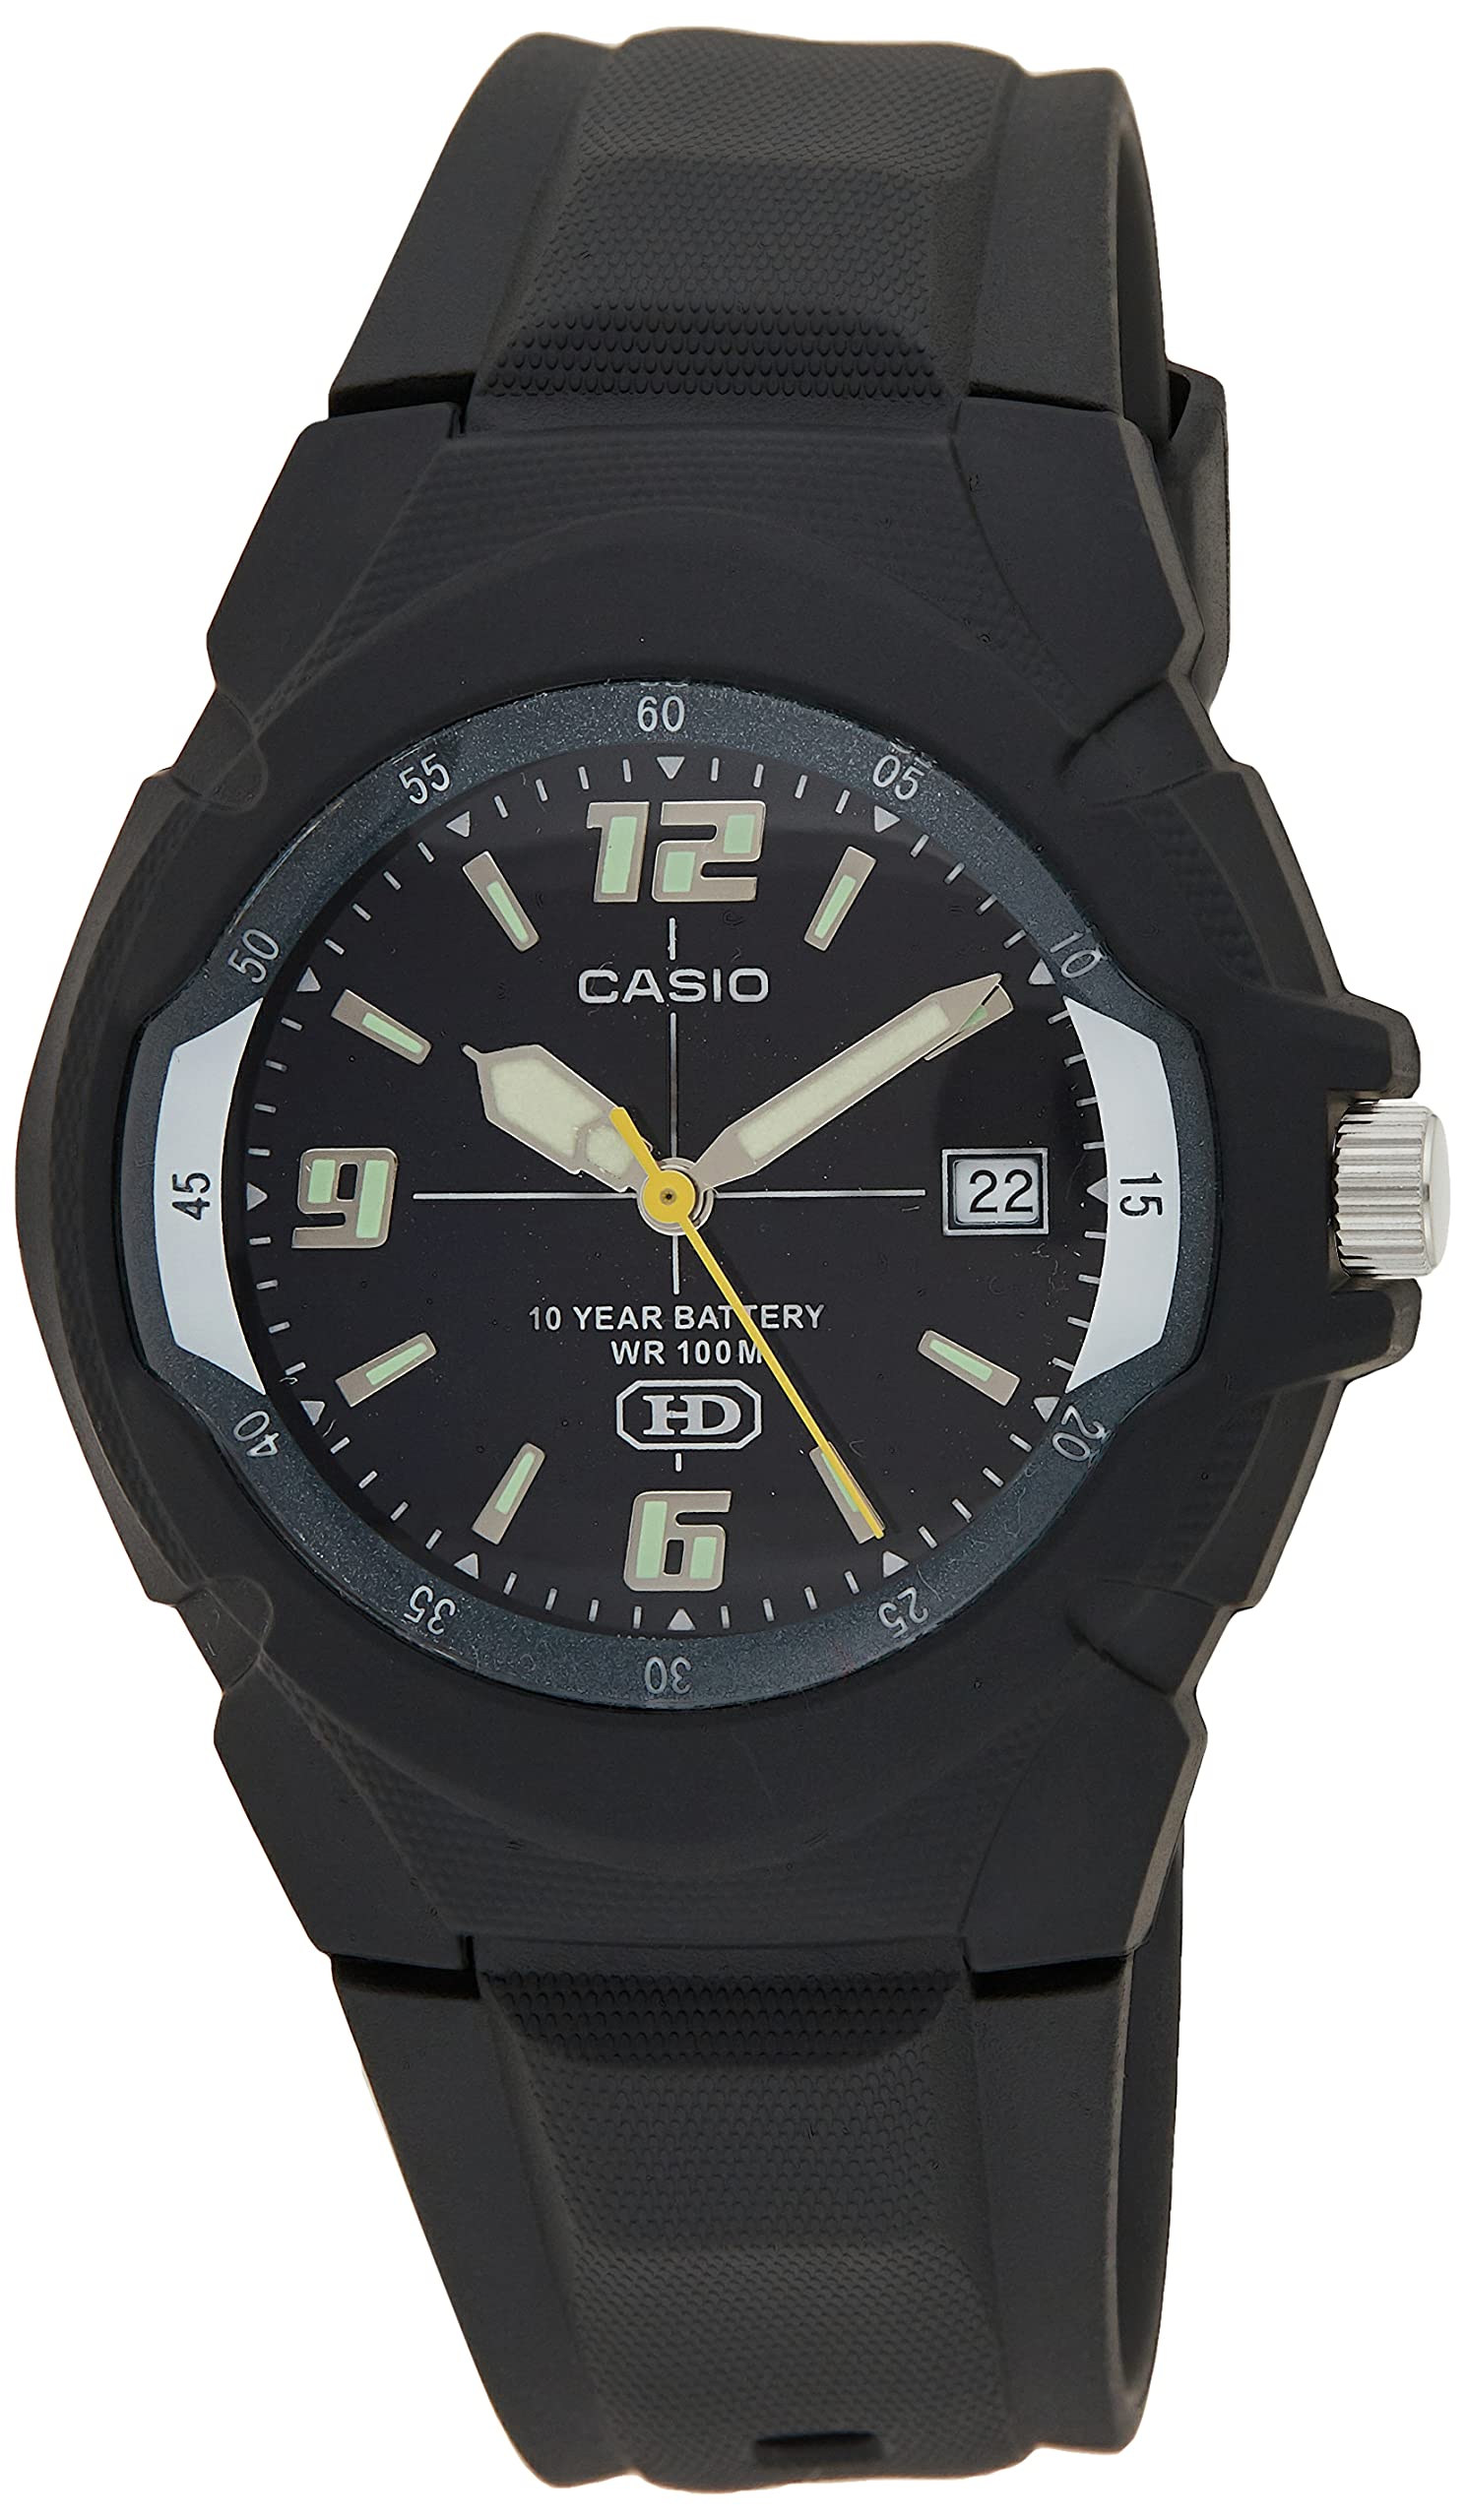 CASIO Men's MW600F-2AV Sport Watch with Black Resin Band